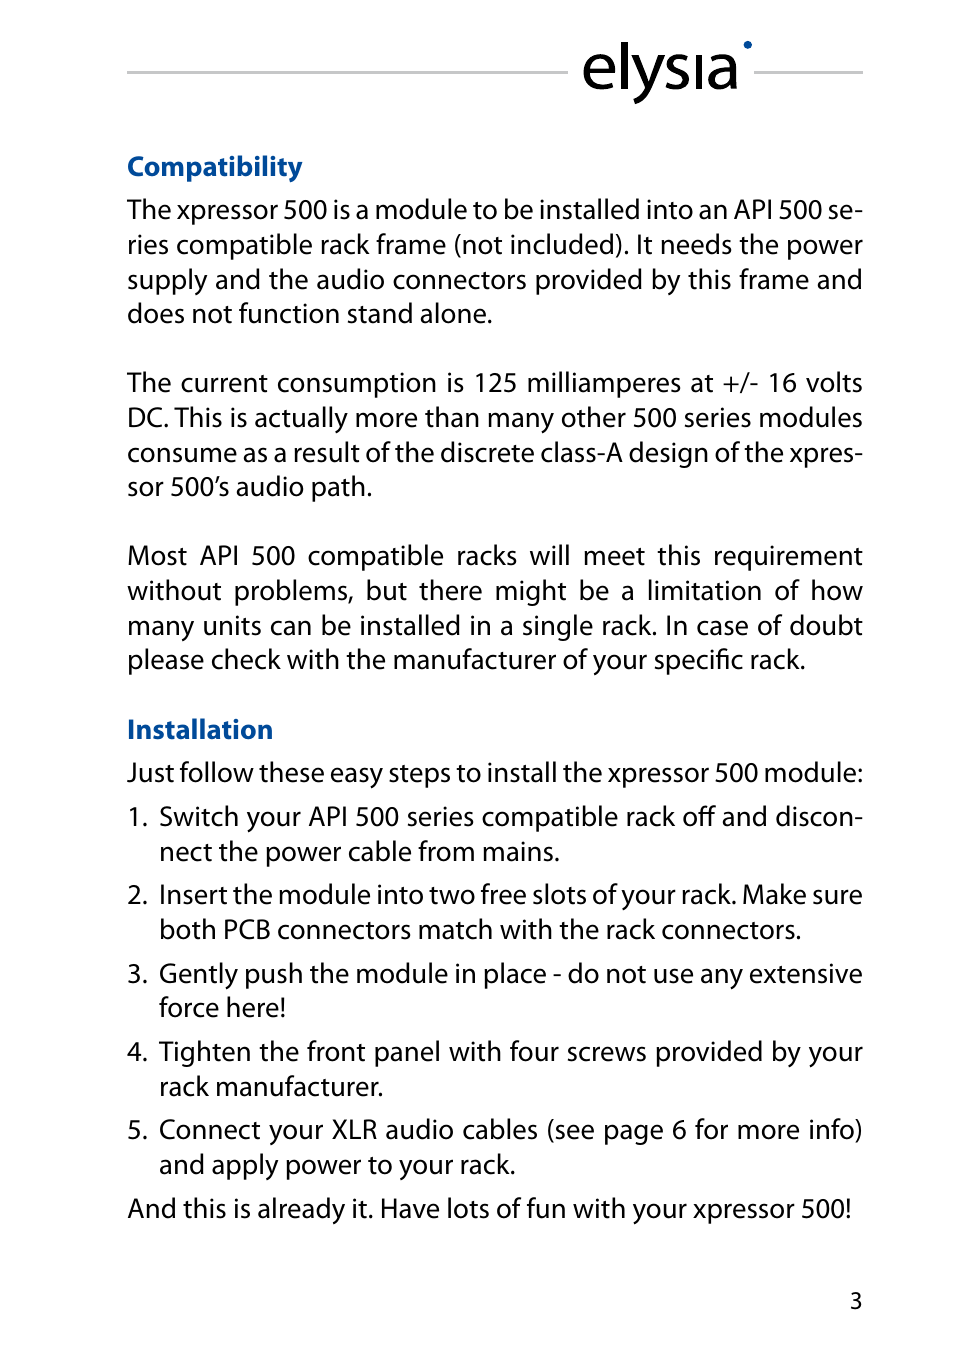 Compatibility, Installation | elysia xpressor 500 User Manual | Page 3 / 16